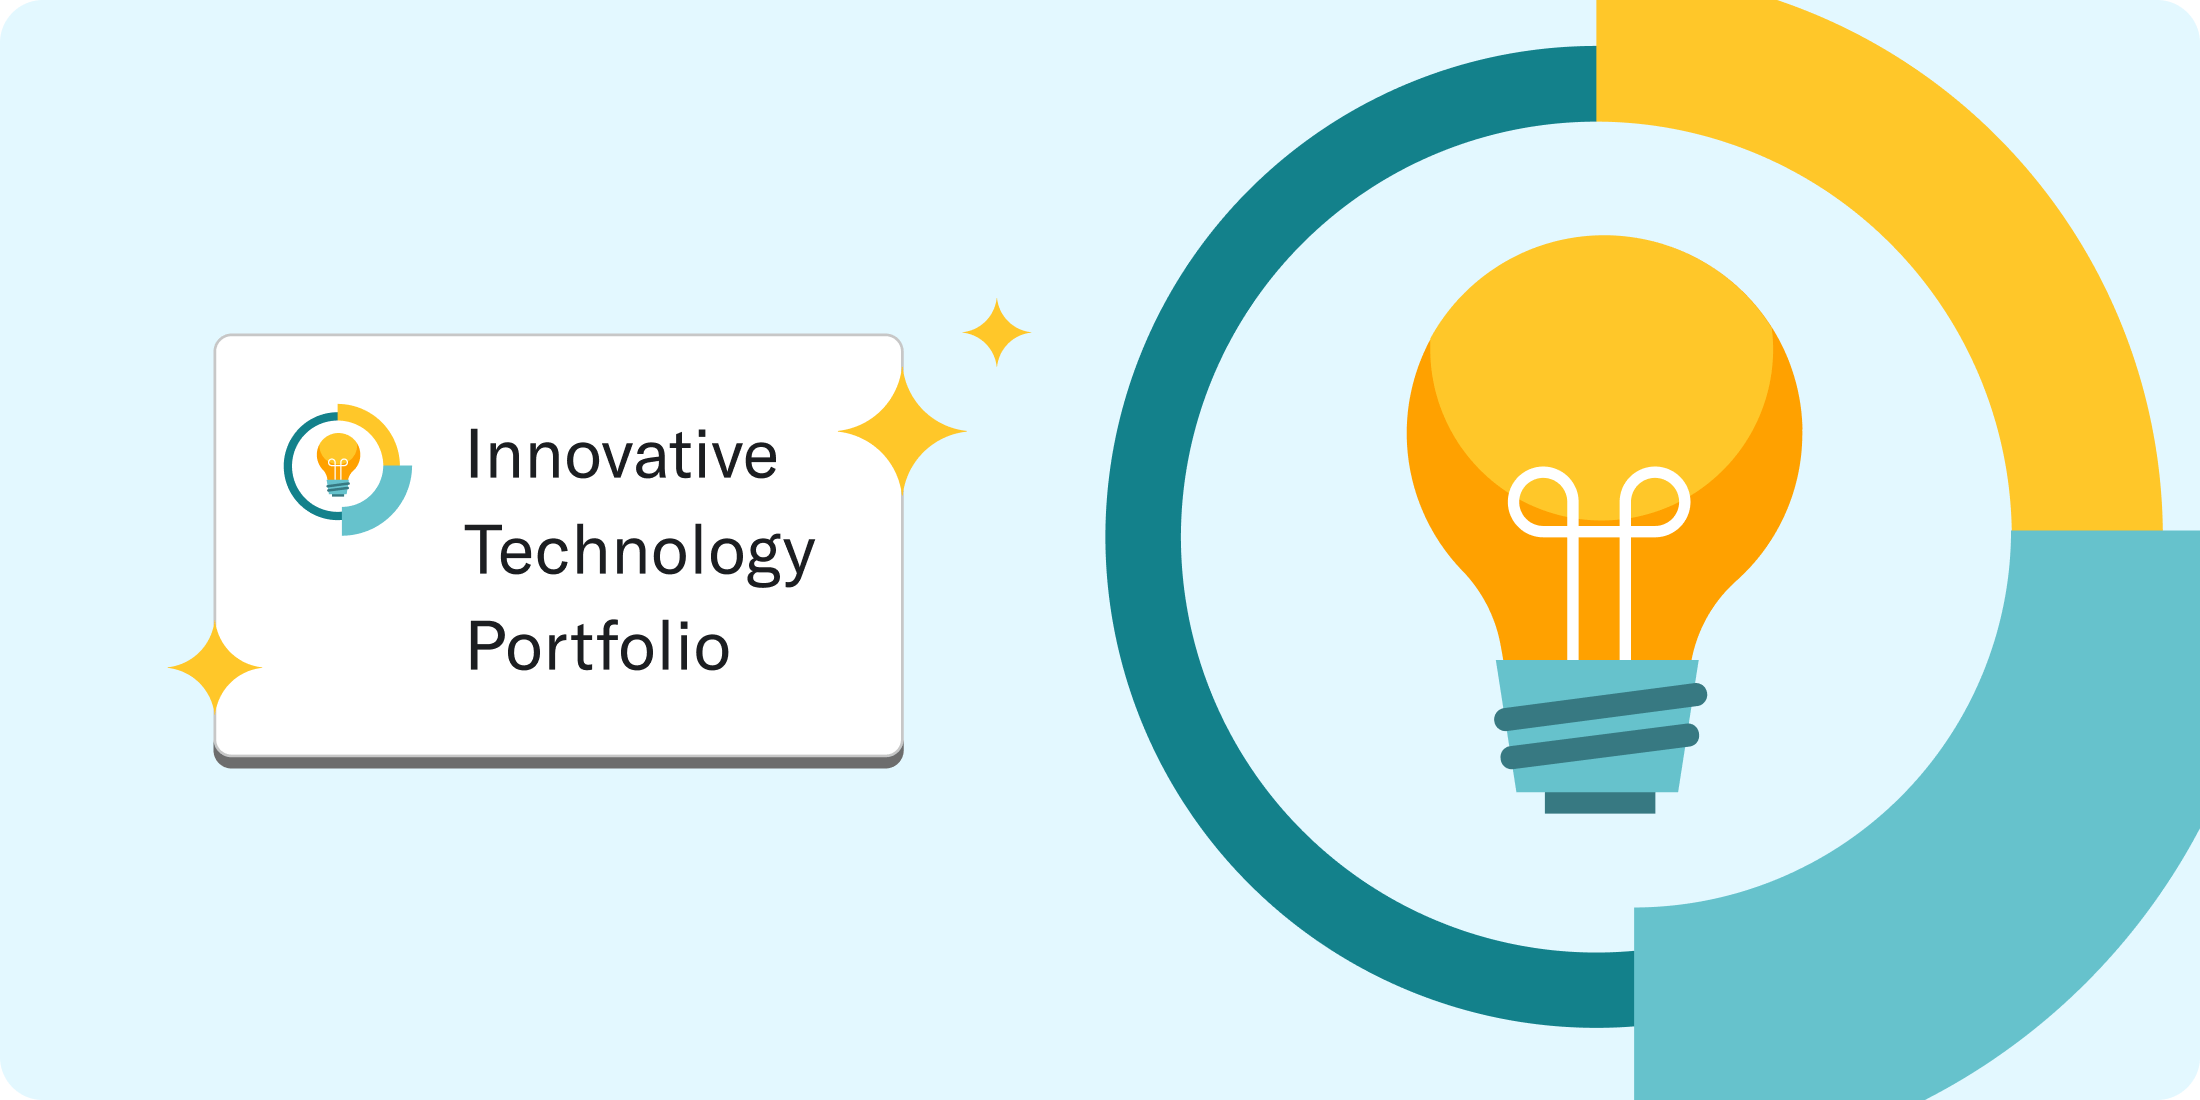 Innovative Technology portfolio title and light bulb icon